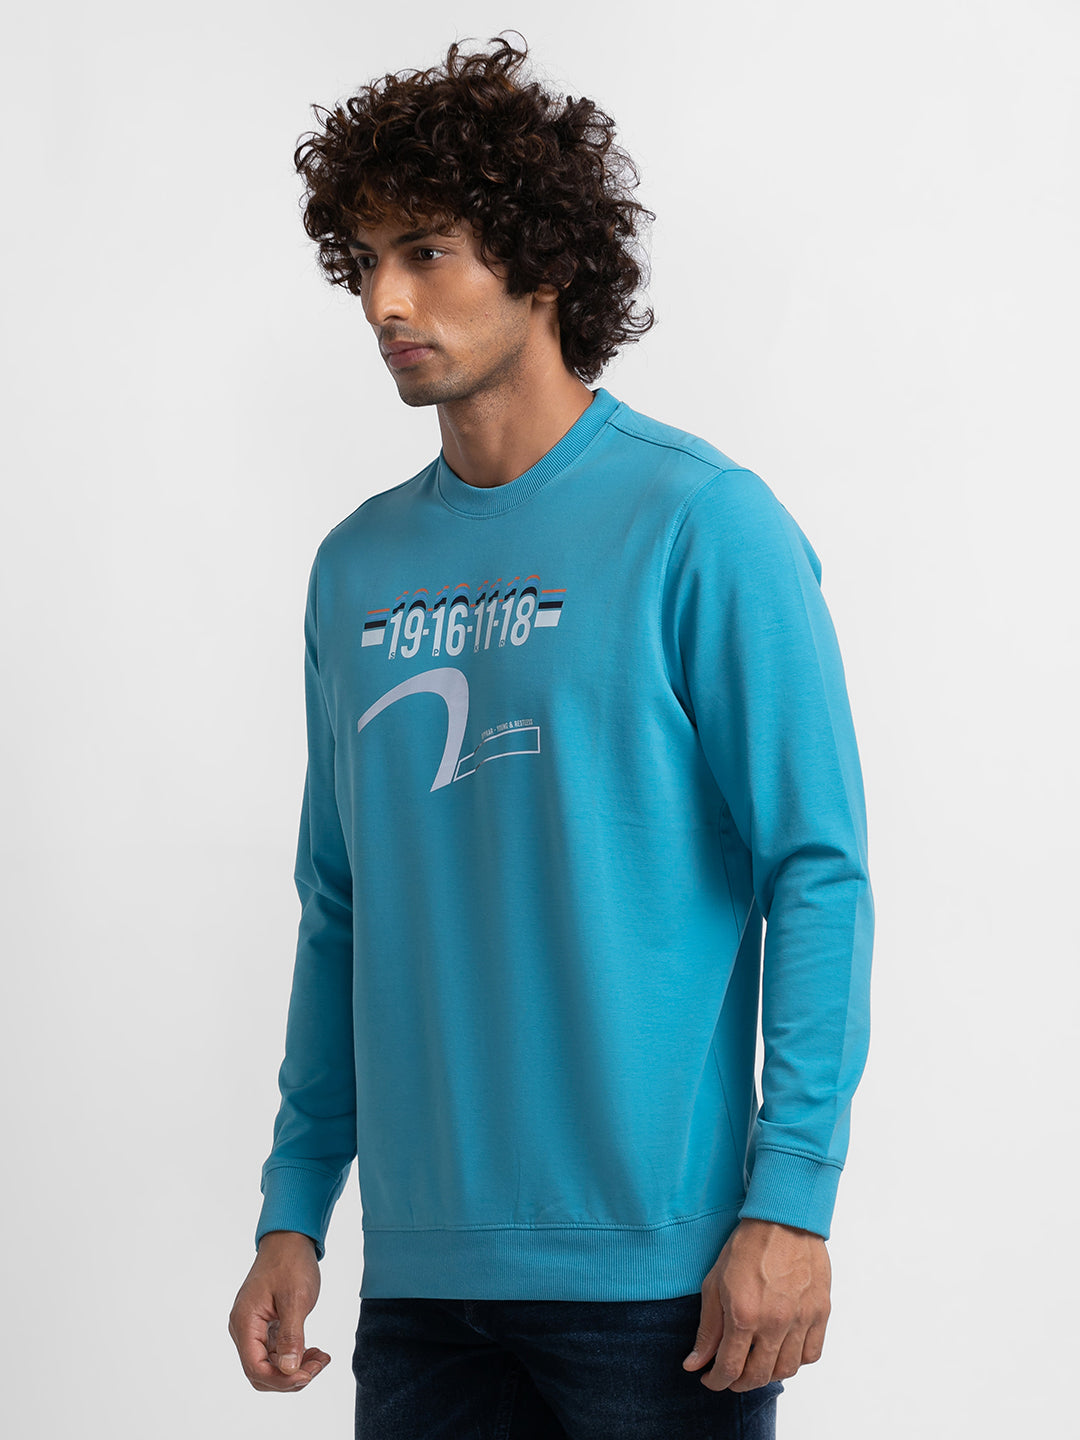 Spykar Cool Blue Cotton Full Sleeve Round Neck Sweatshirt For Men